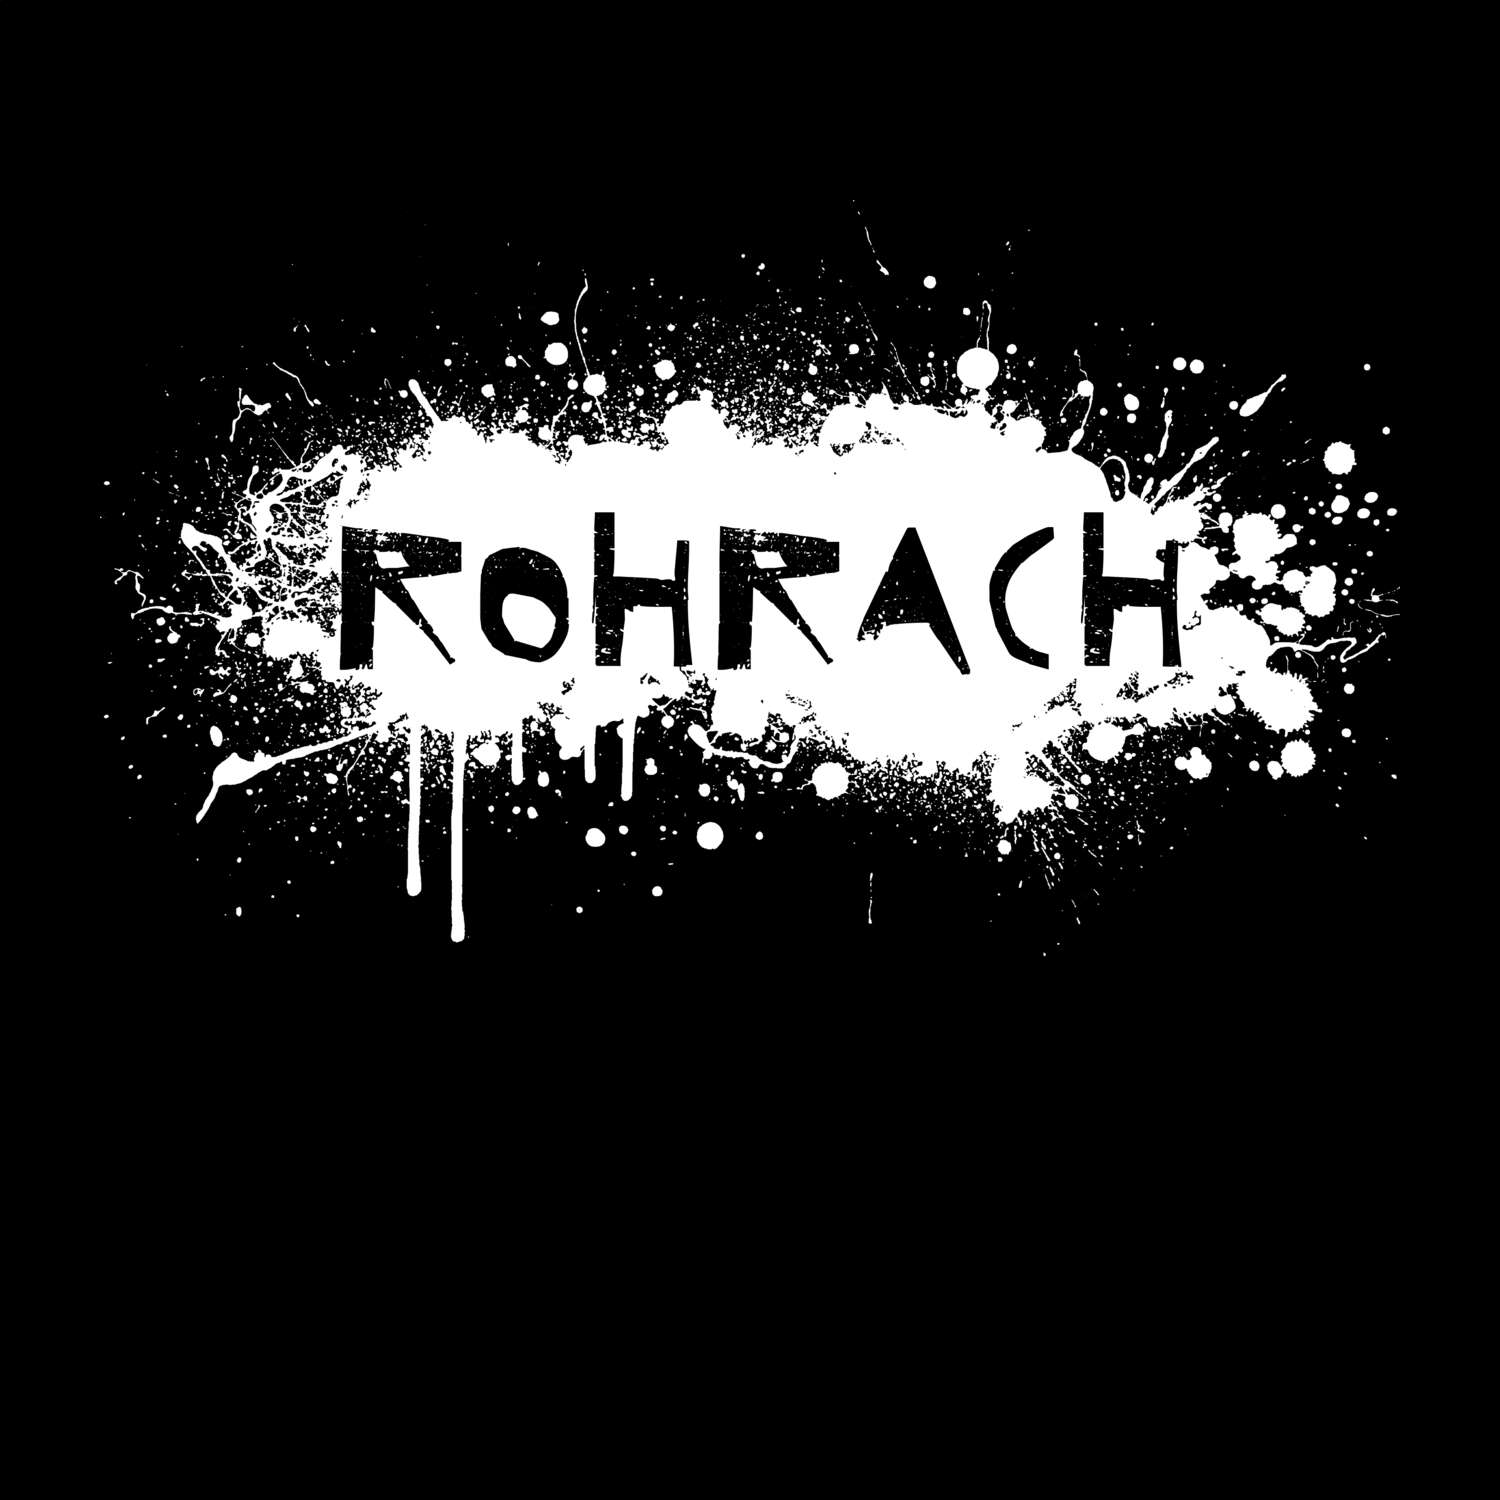 Rohrach T-Shirt »Paint Splash Punk«